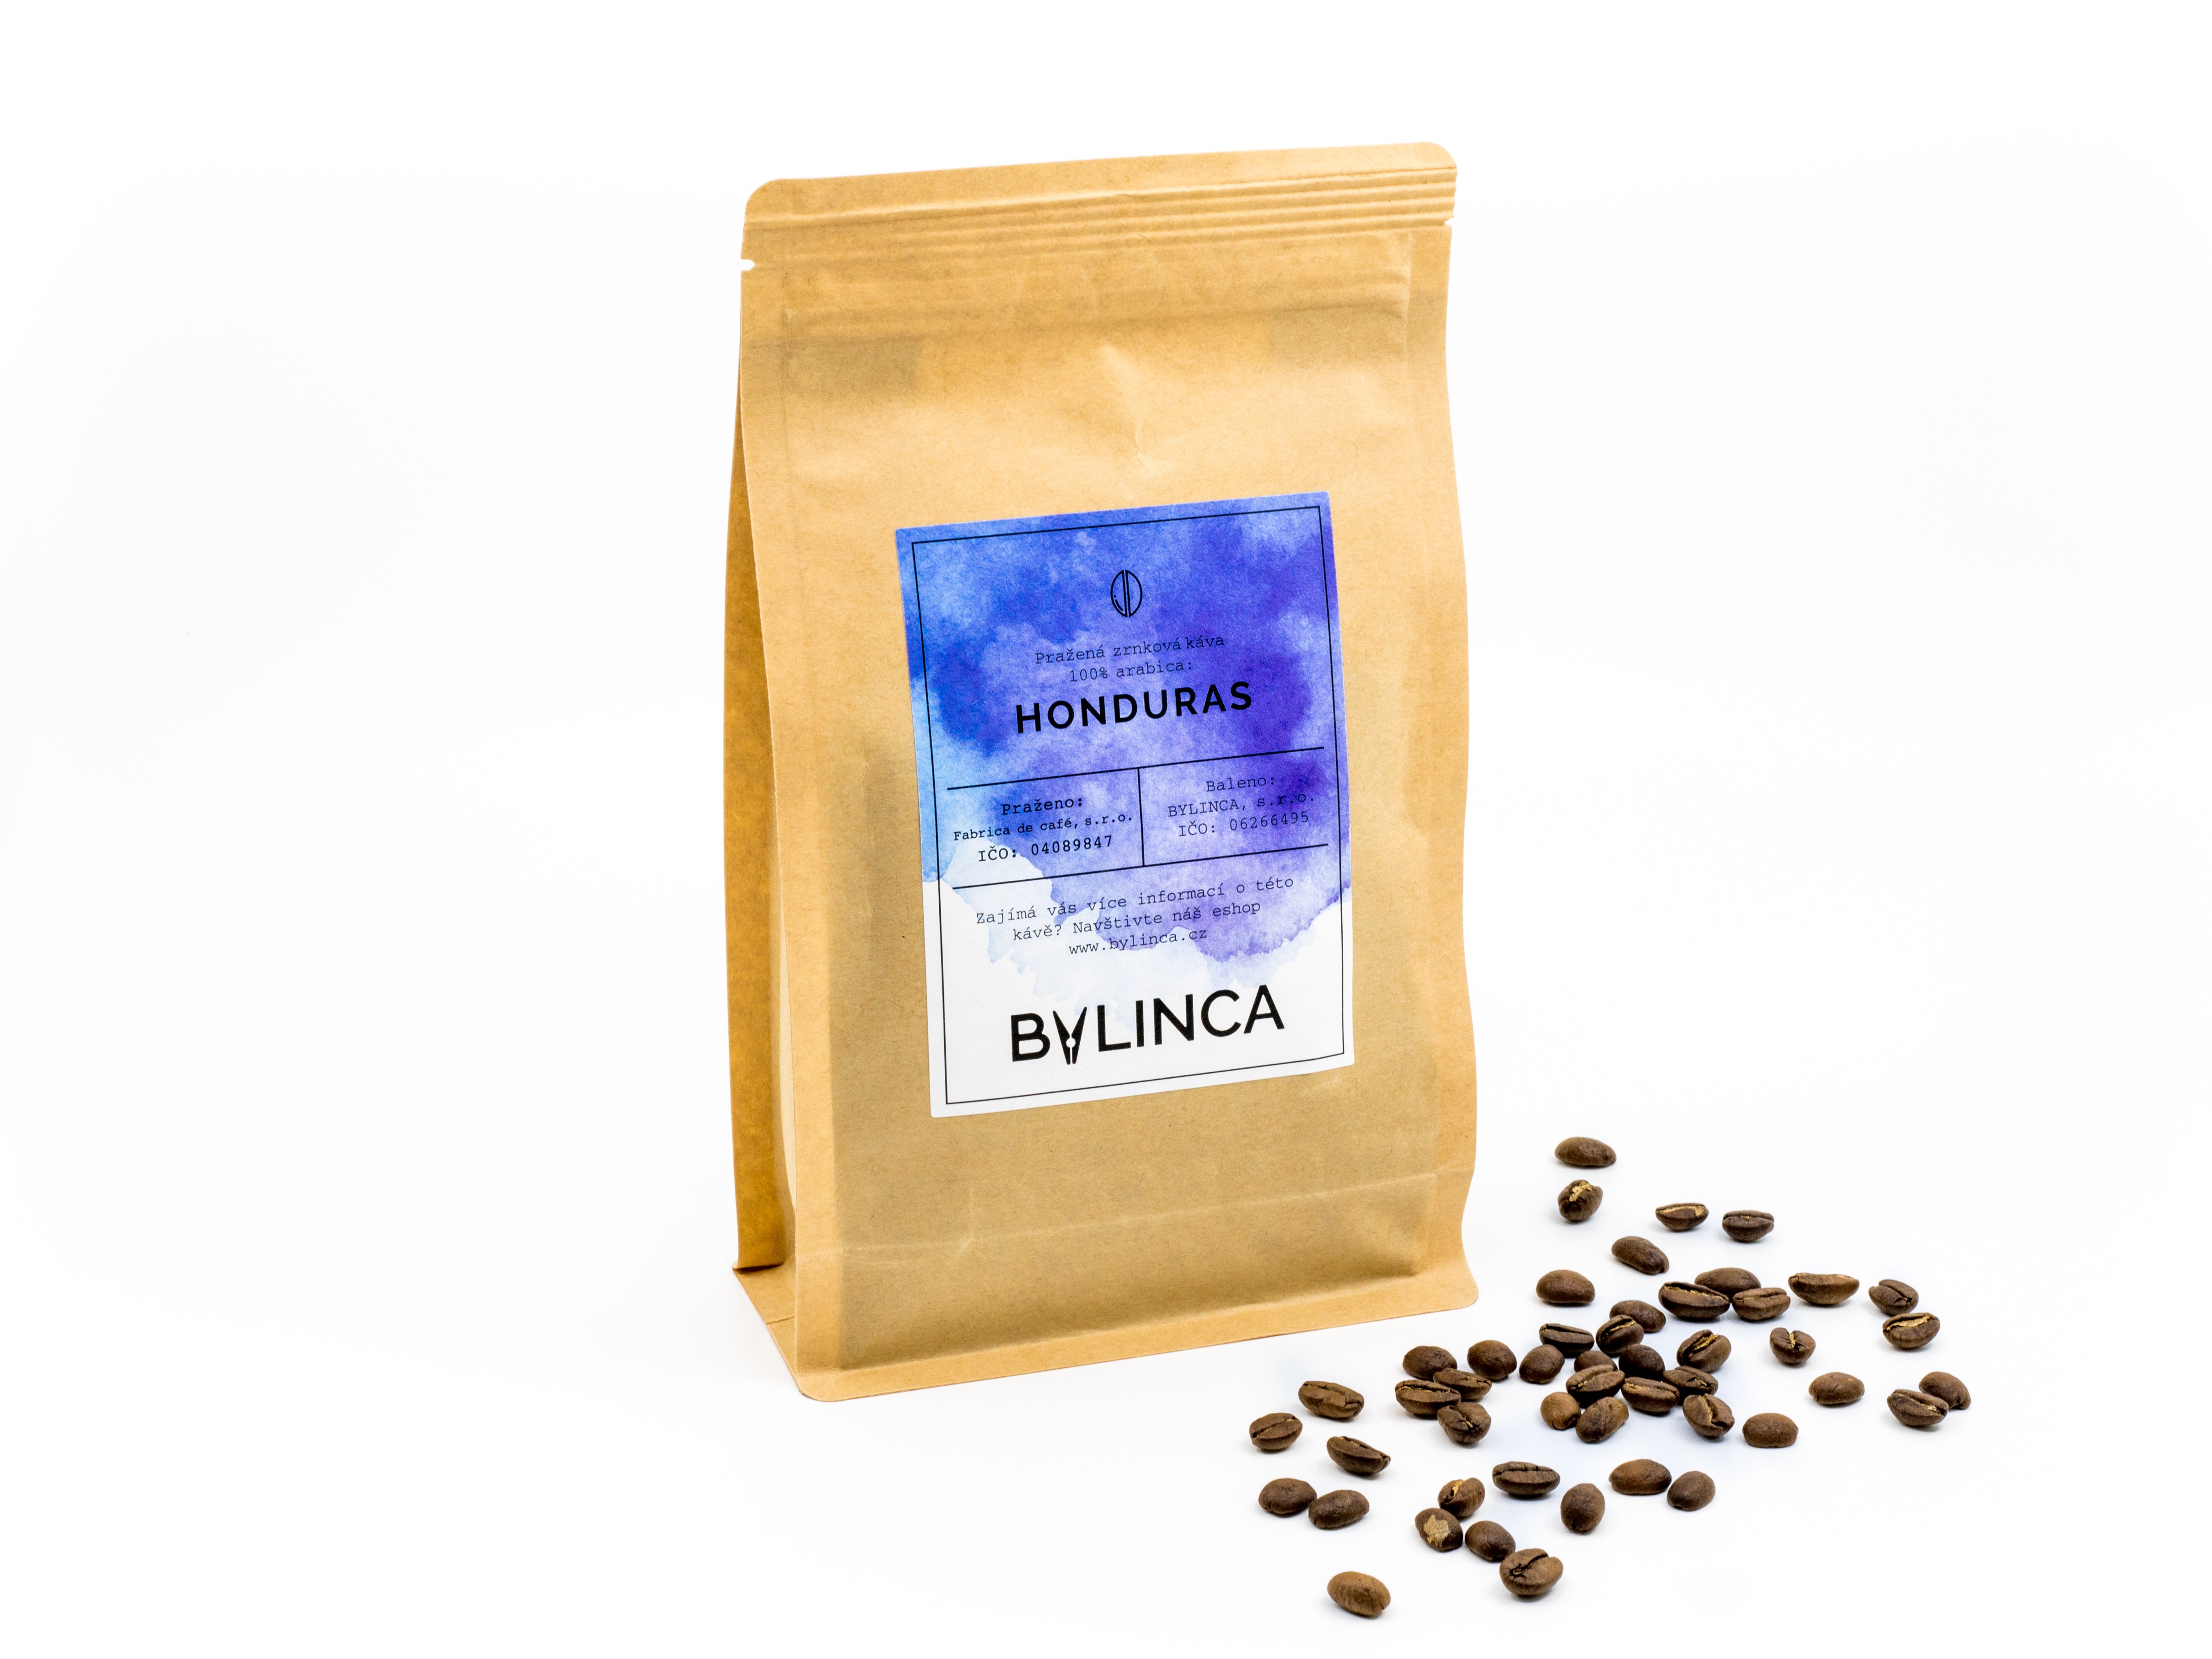 BYLINCA Zrnková káva: Honduras 100g, 250g, 500g, 1000g 1 ks: 500g